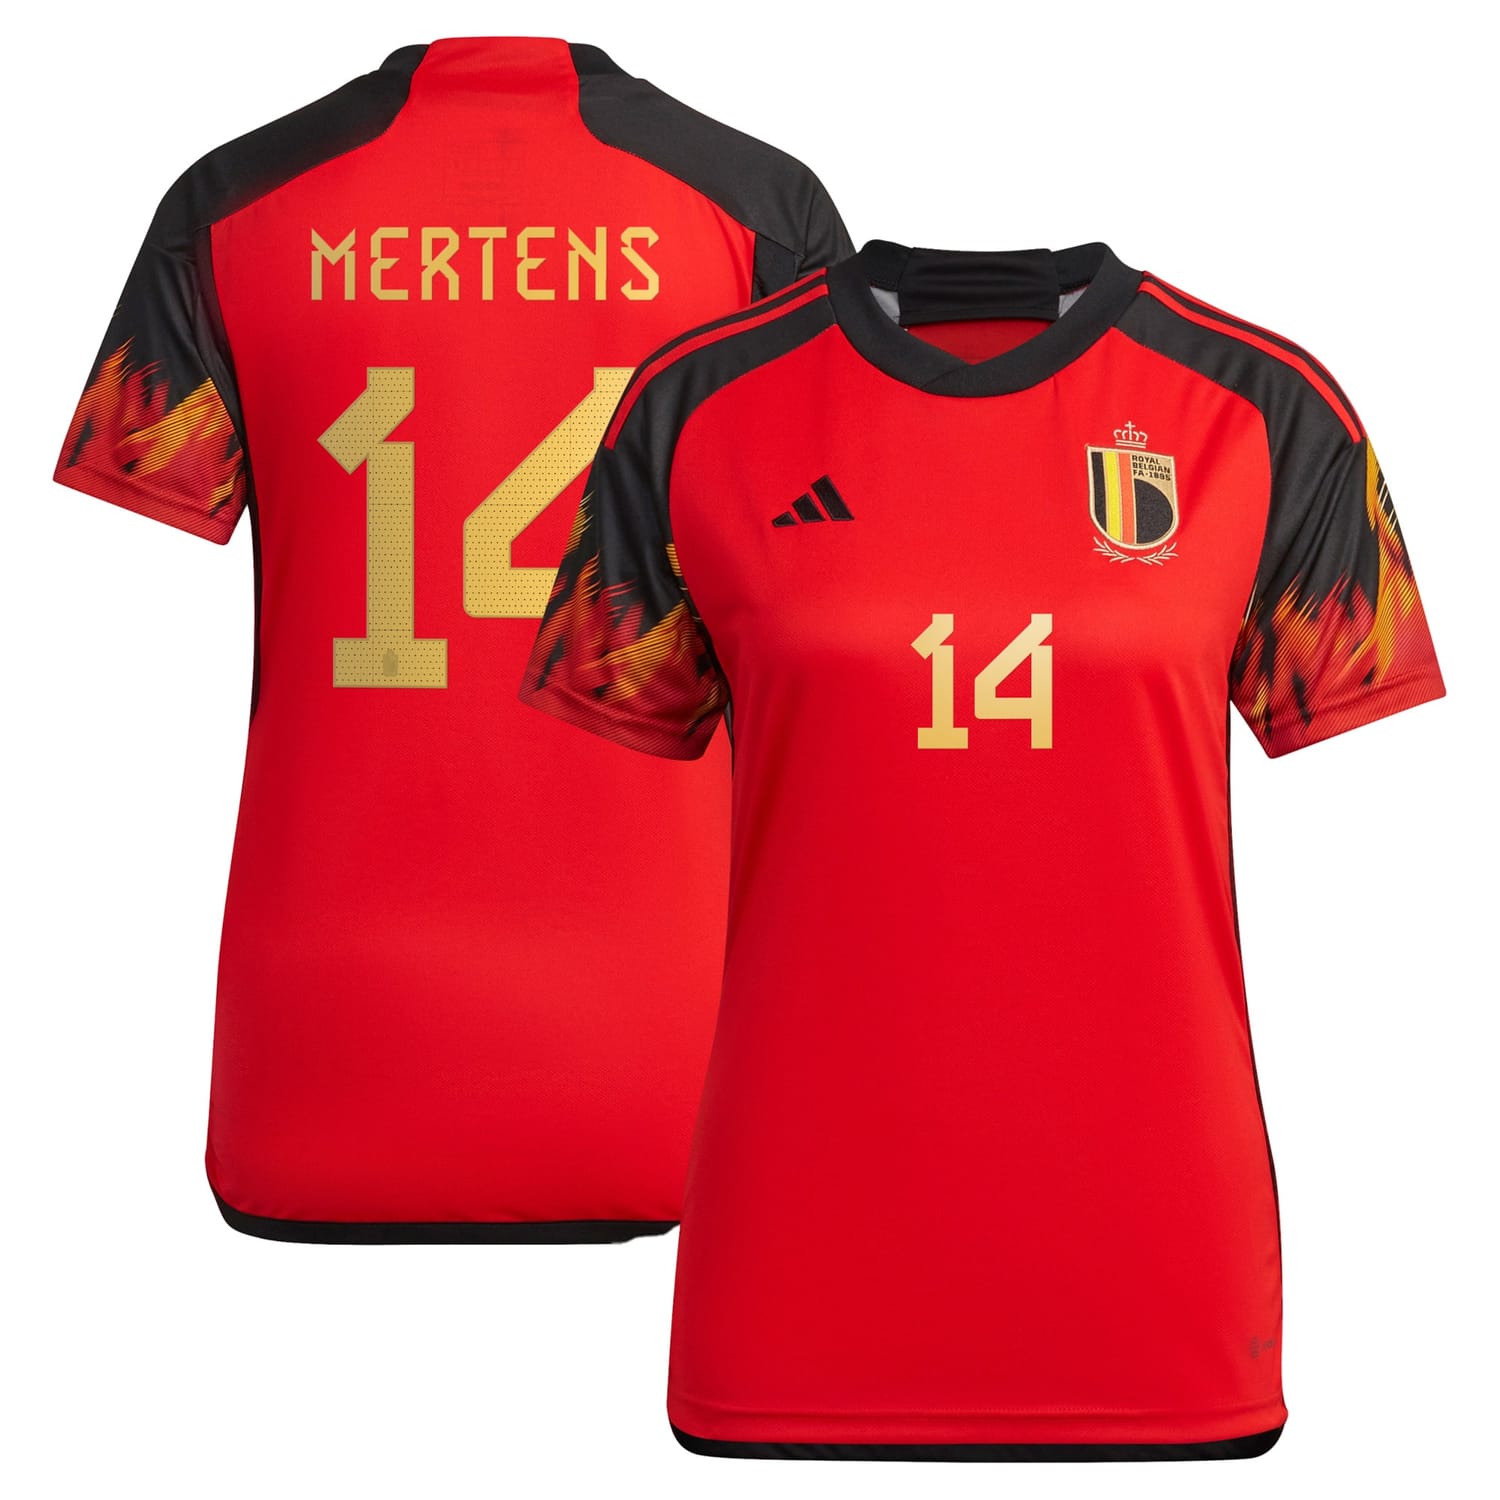 Belgium National Team Home Jersey Shirt 2022 player Dries Mertens 14 printing for Women